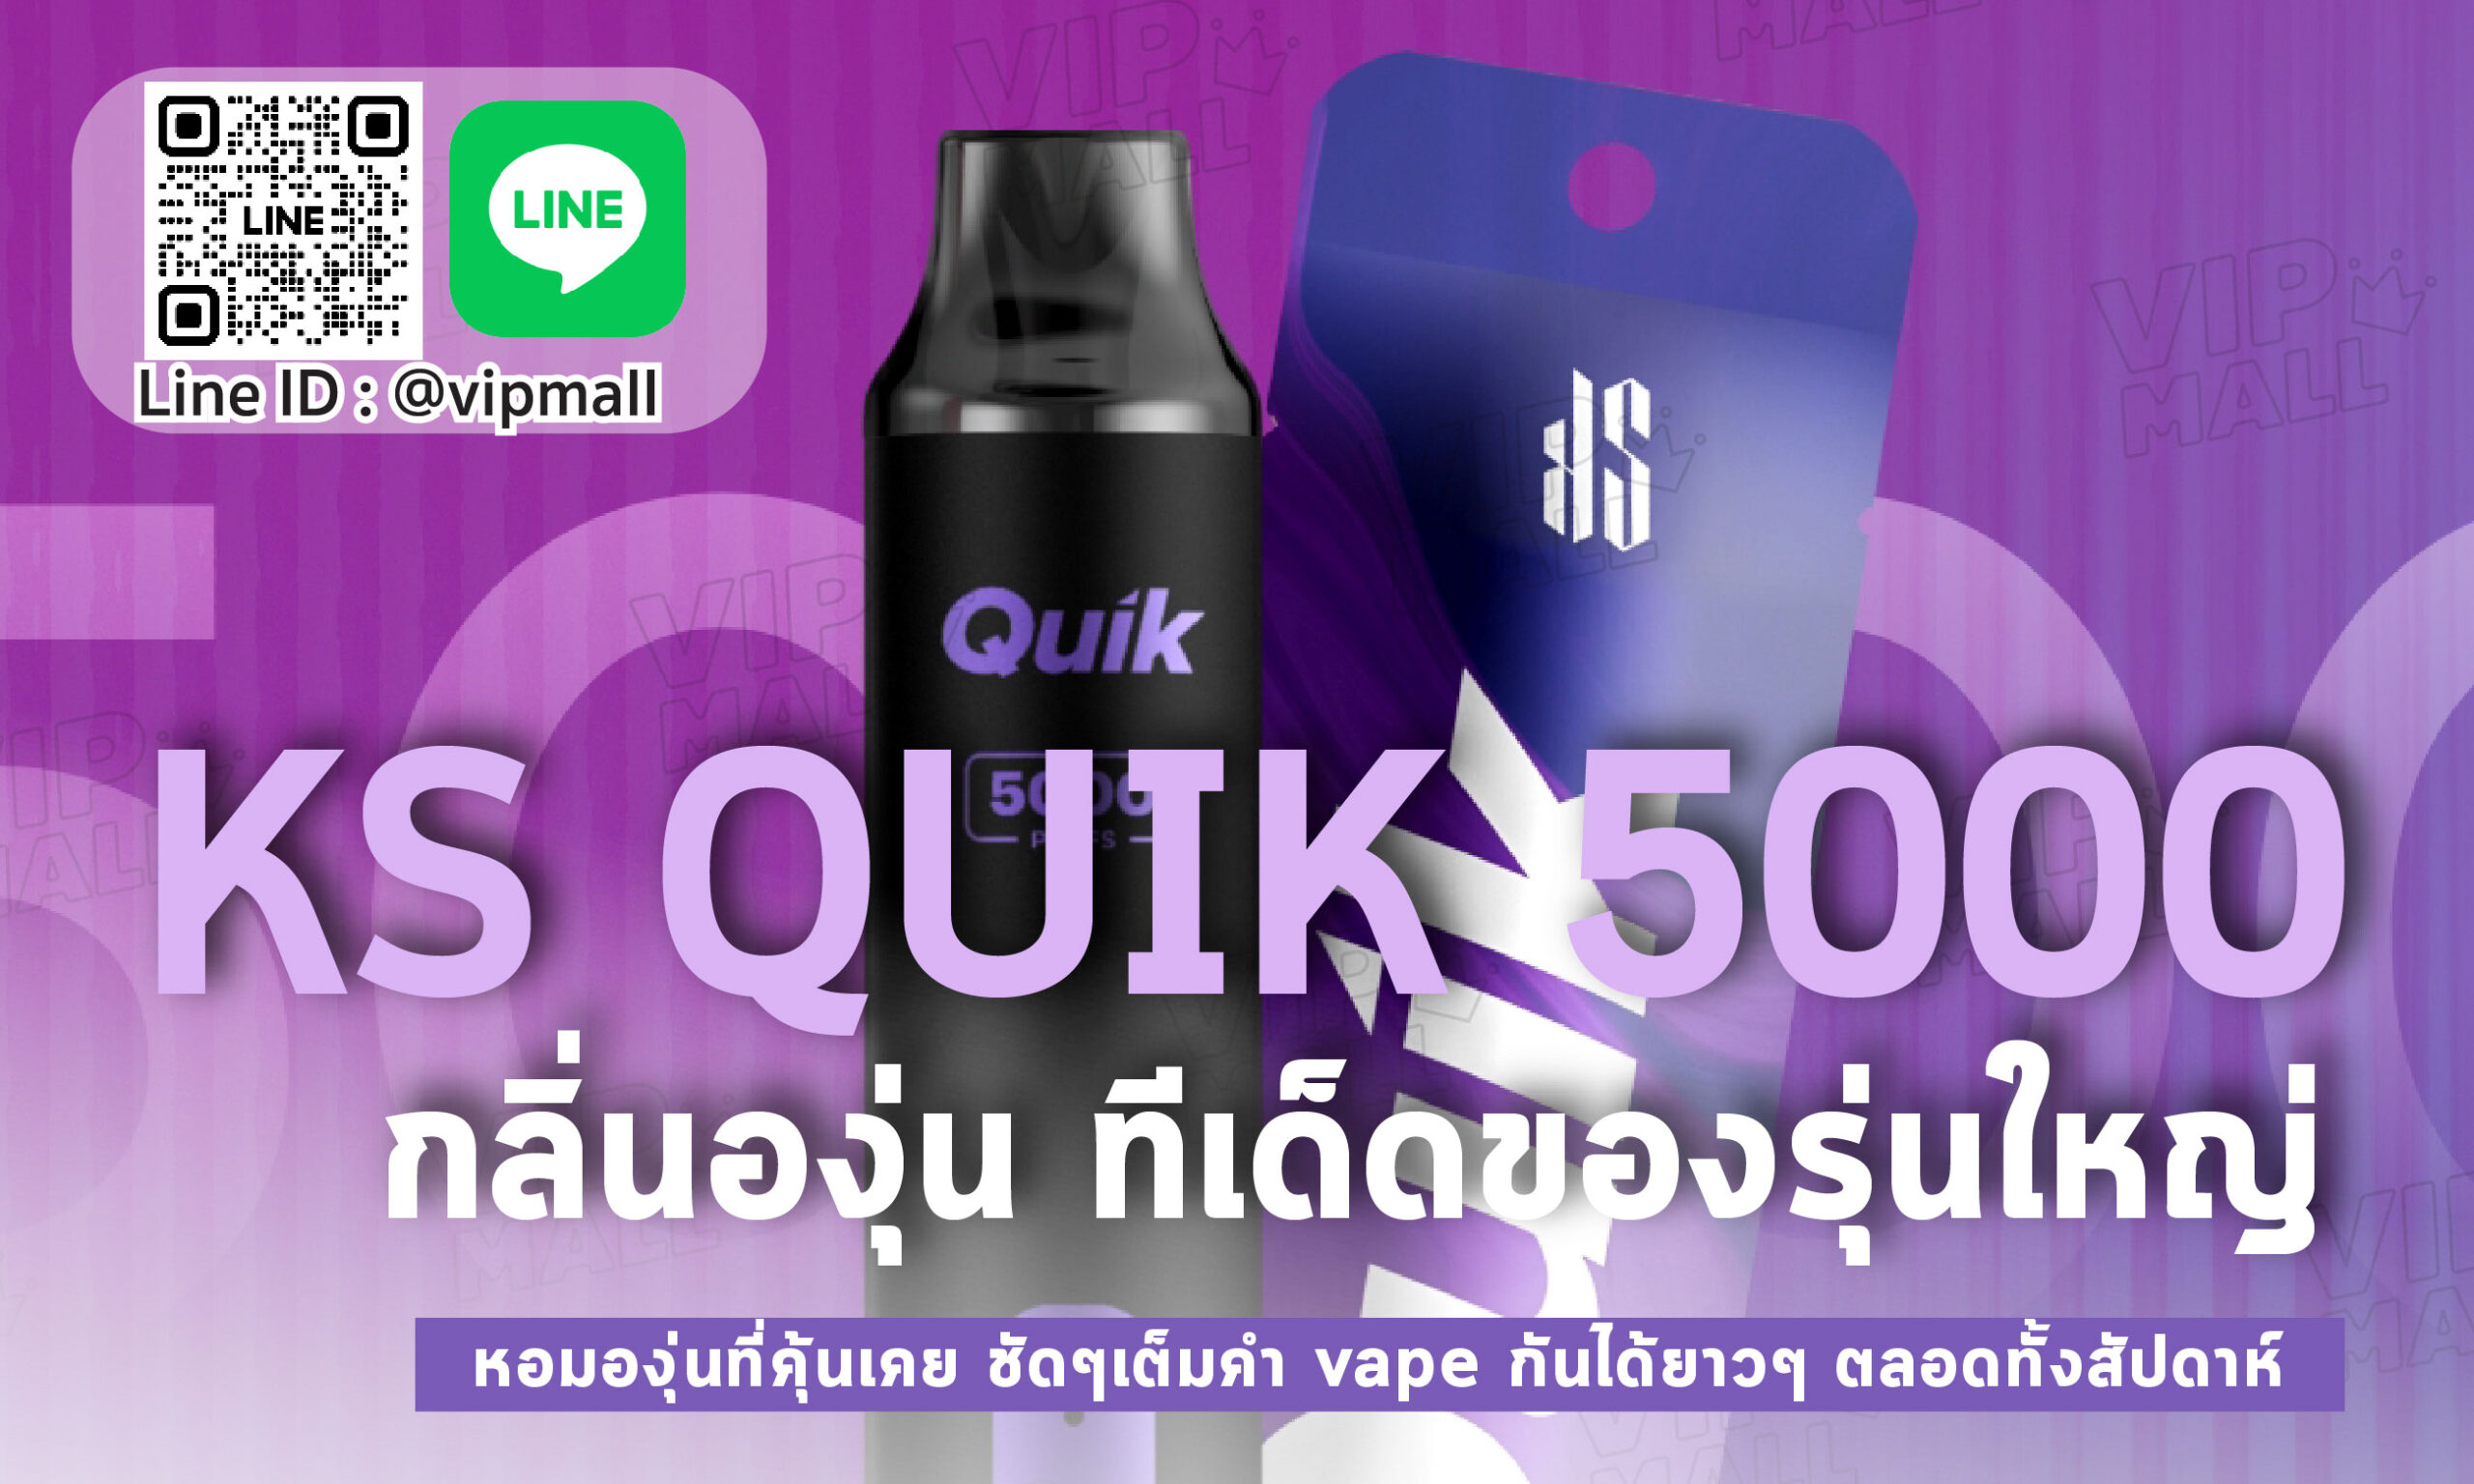 KS Quik 5000 กลิ่นองุ่น ขวัญใจนักสูบพอตบุหรี่ไฟฟ้าทุกเพศทุกวัย หนึ่งในกลิ่นสามัญประจำกายที่ต้องมีติดตัวไว้ จะสาย Fruity หรือสายอื่น ก็ต้องมี